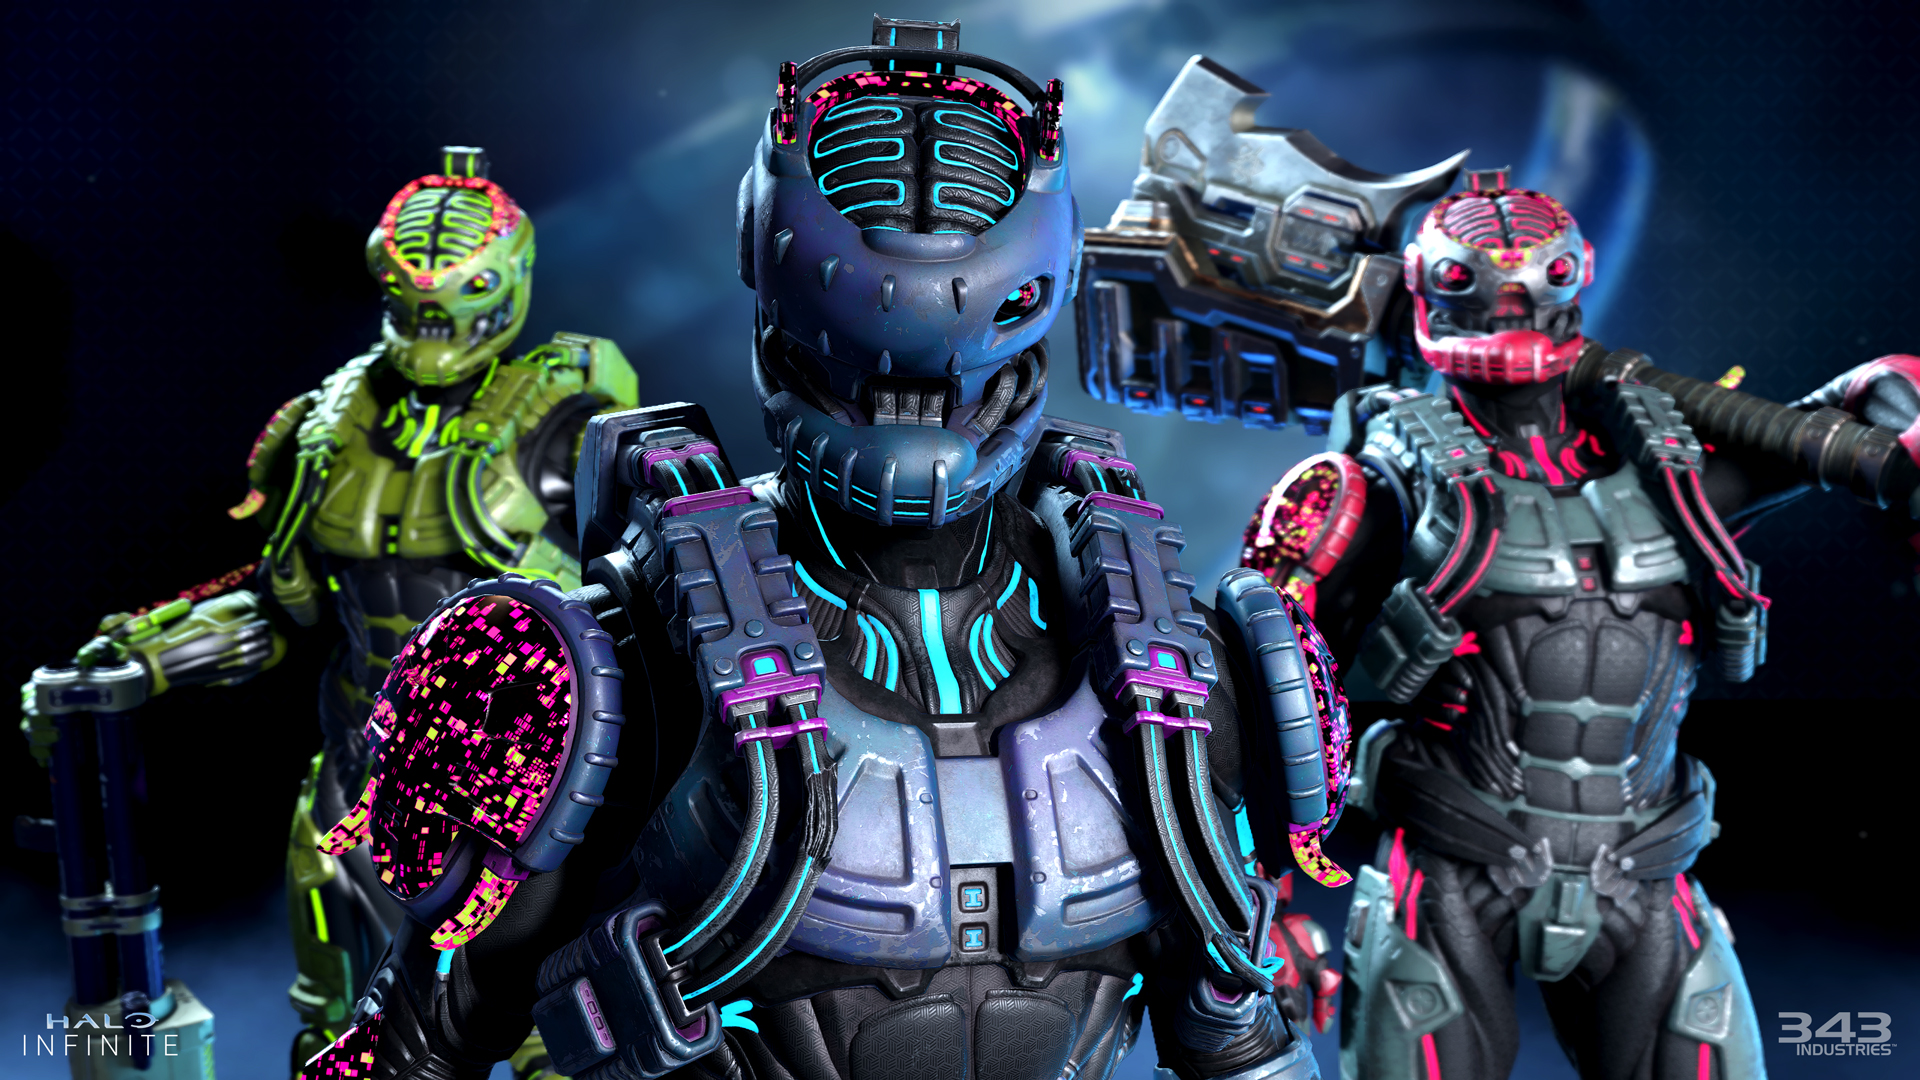 Halo Infinite image of three Executors clad in Cyber Showdown III customization